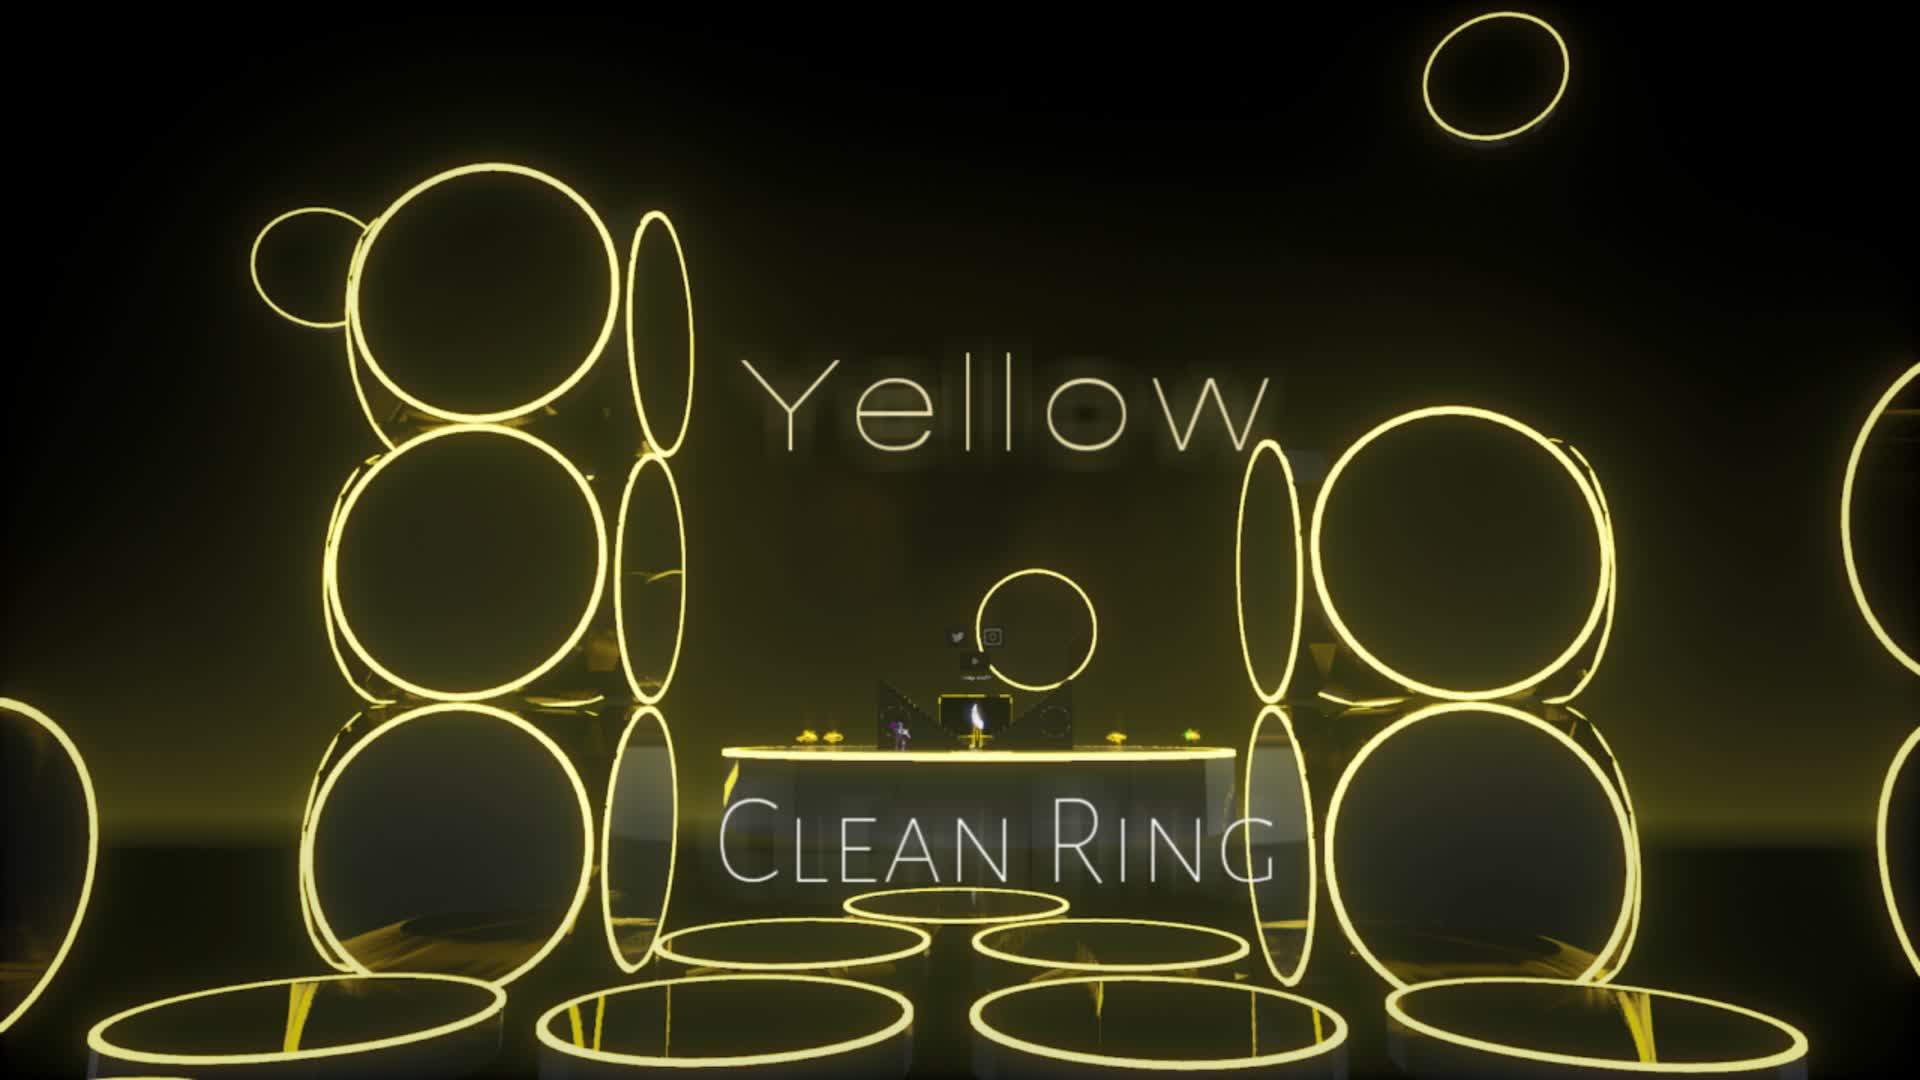 CLEAN RING 1V1 [YELLOW] •NO DELAY•